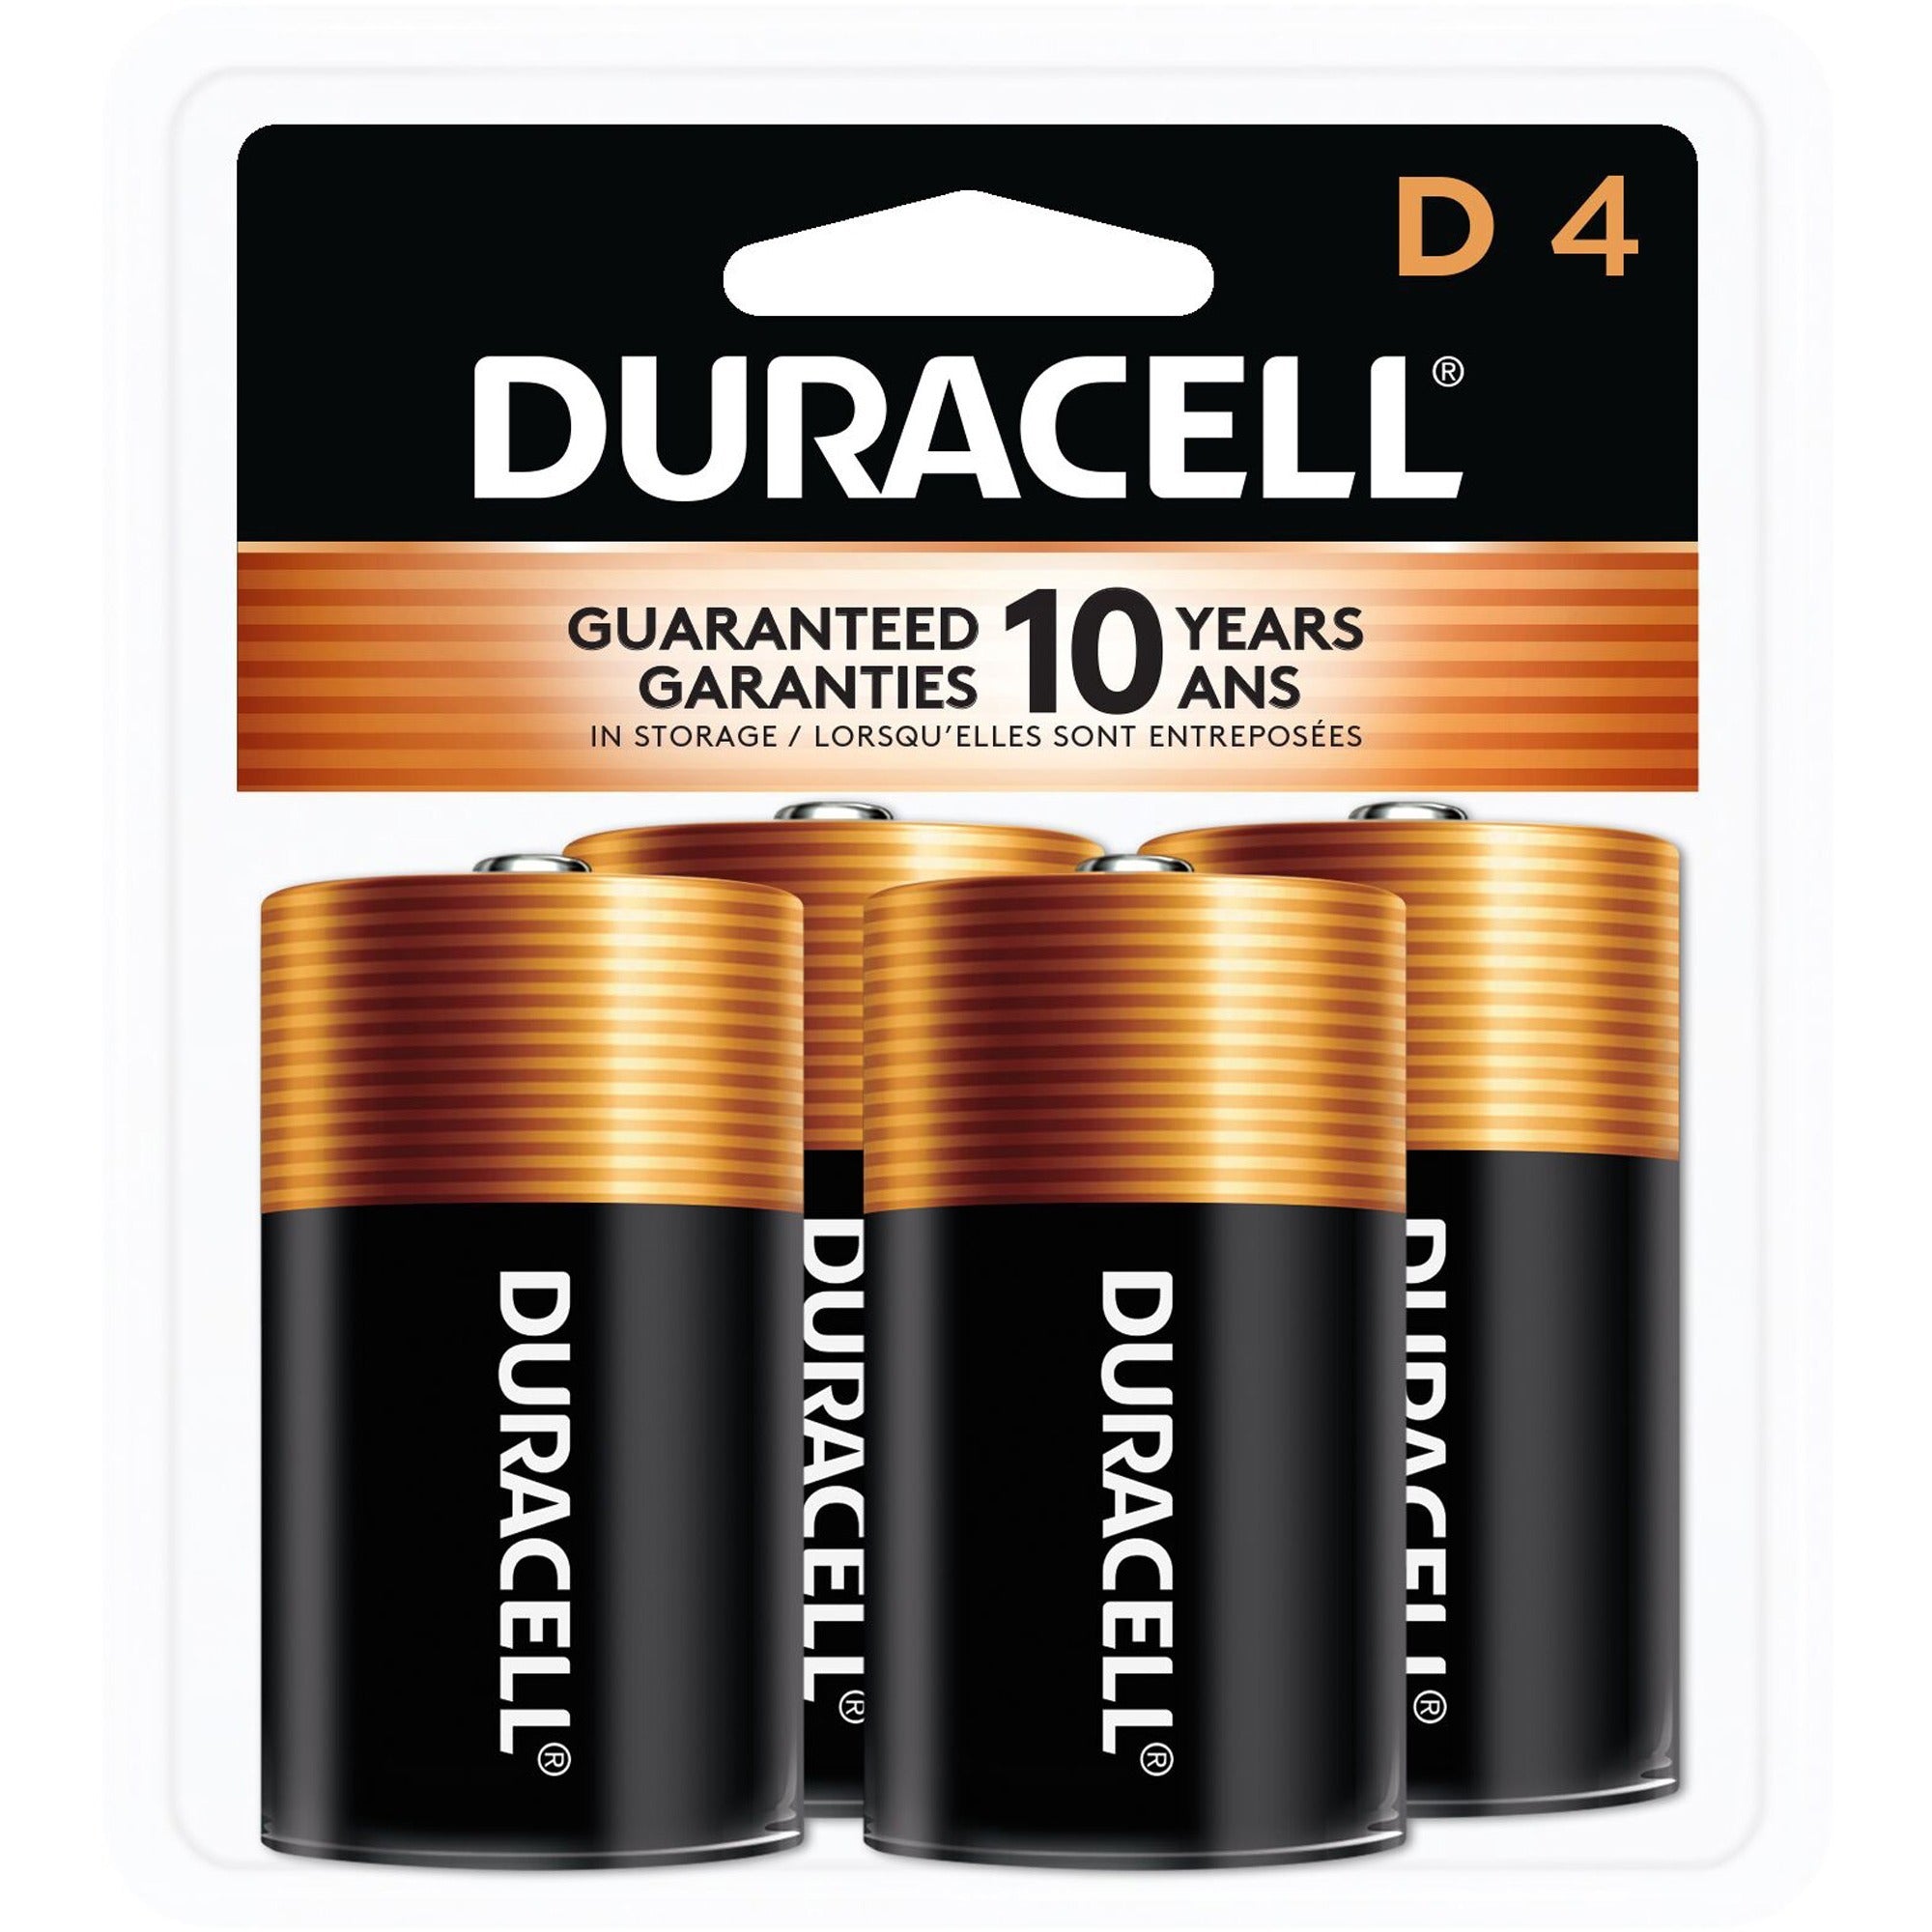 duracell-coppertop-alkaline-d-battery-4-packs-for-multipurpose-d-15-v-dc-48-carton_durmn1300r4zct - 1